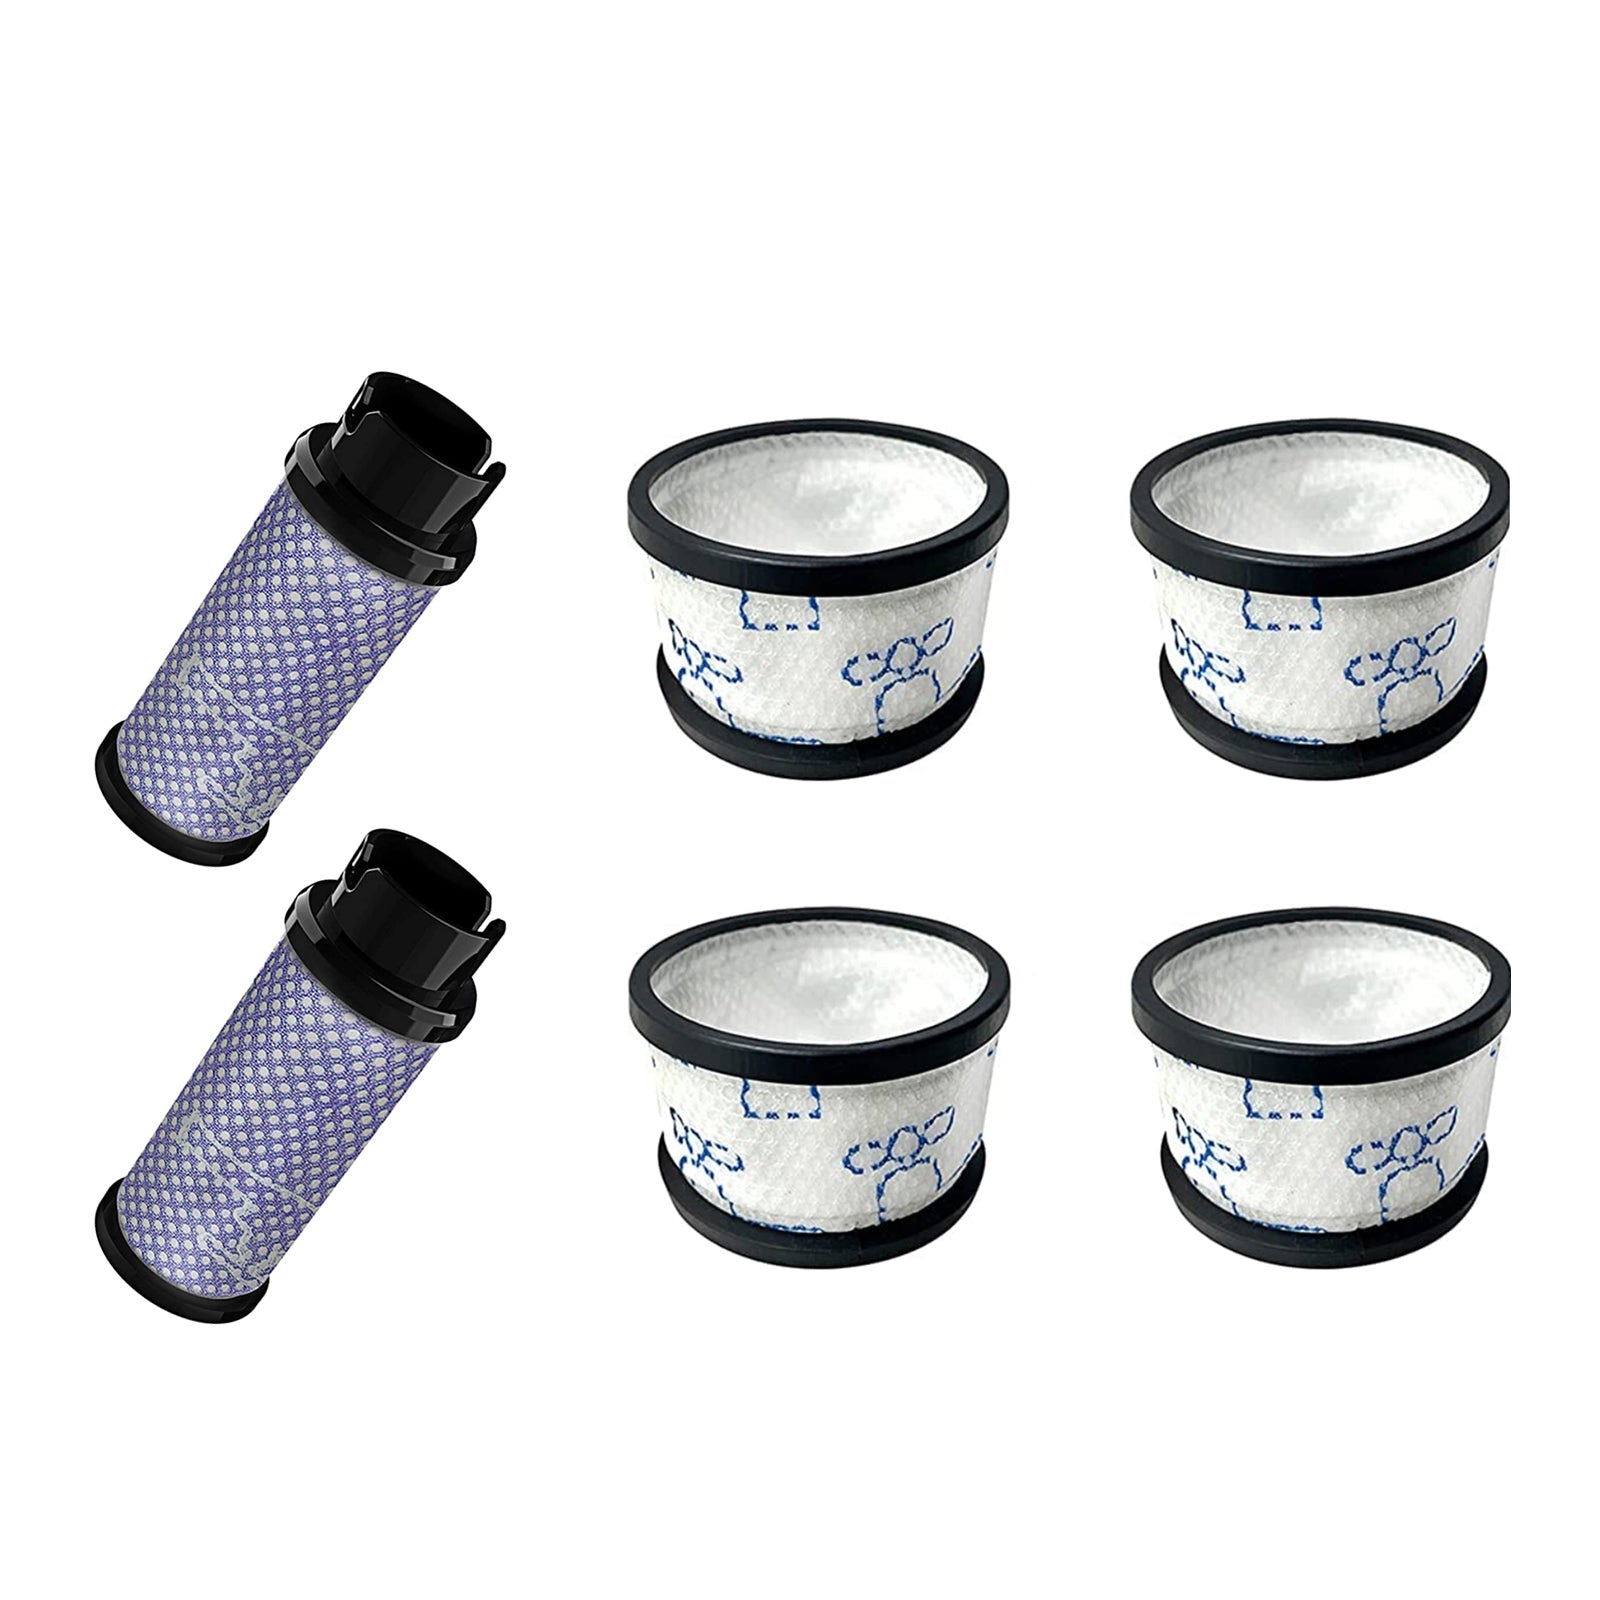 INSE N5/S6/S6P/S600 Cordless Vacuum Filters - Original